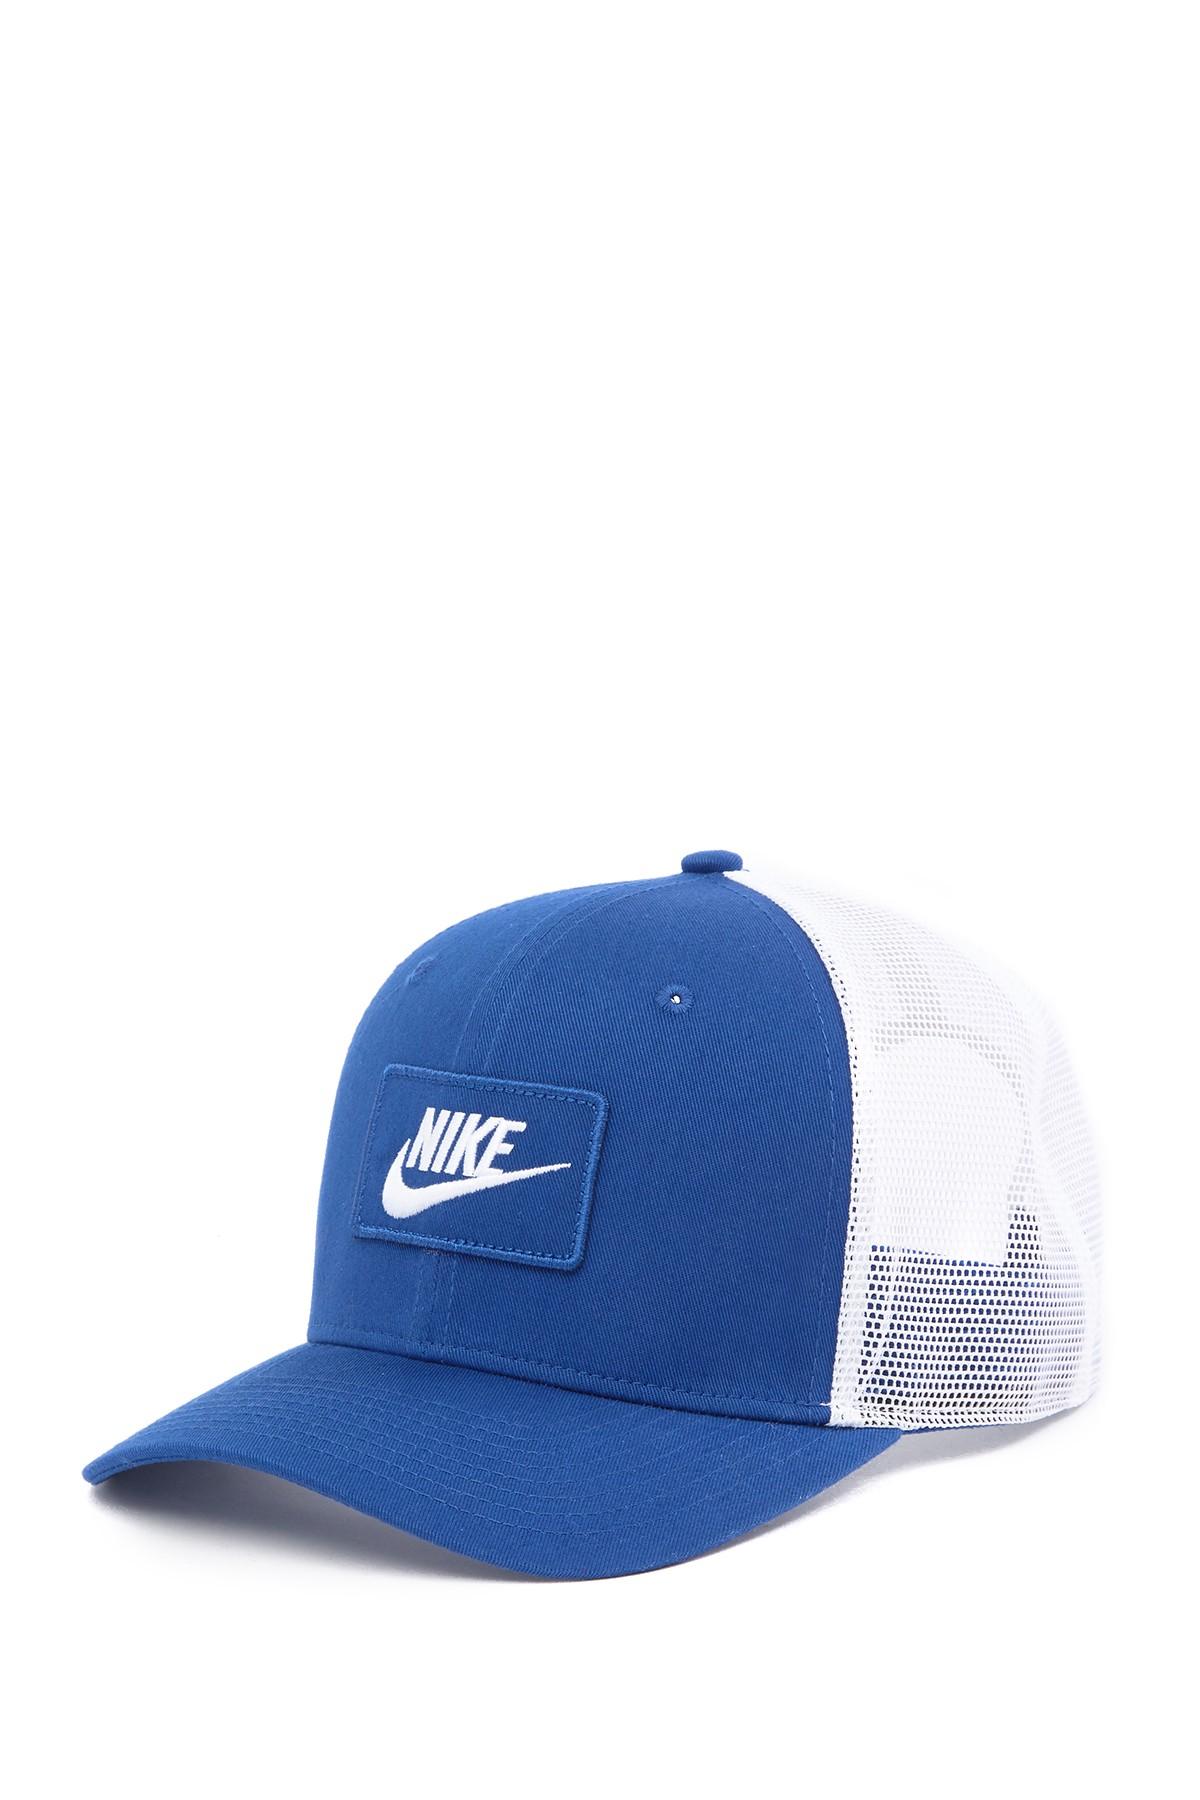 Nike Cotton Nsw Classic99 Trucker Hat In Blue For Men Lyst